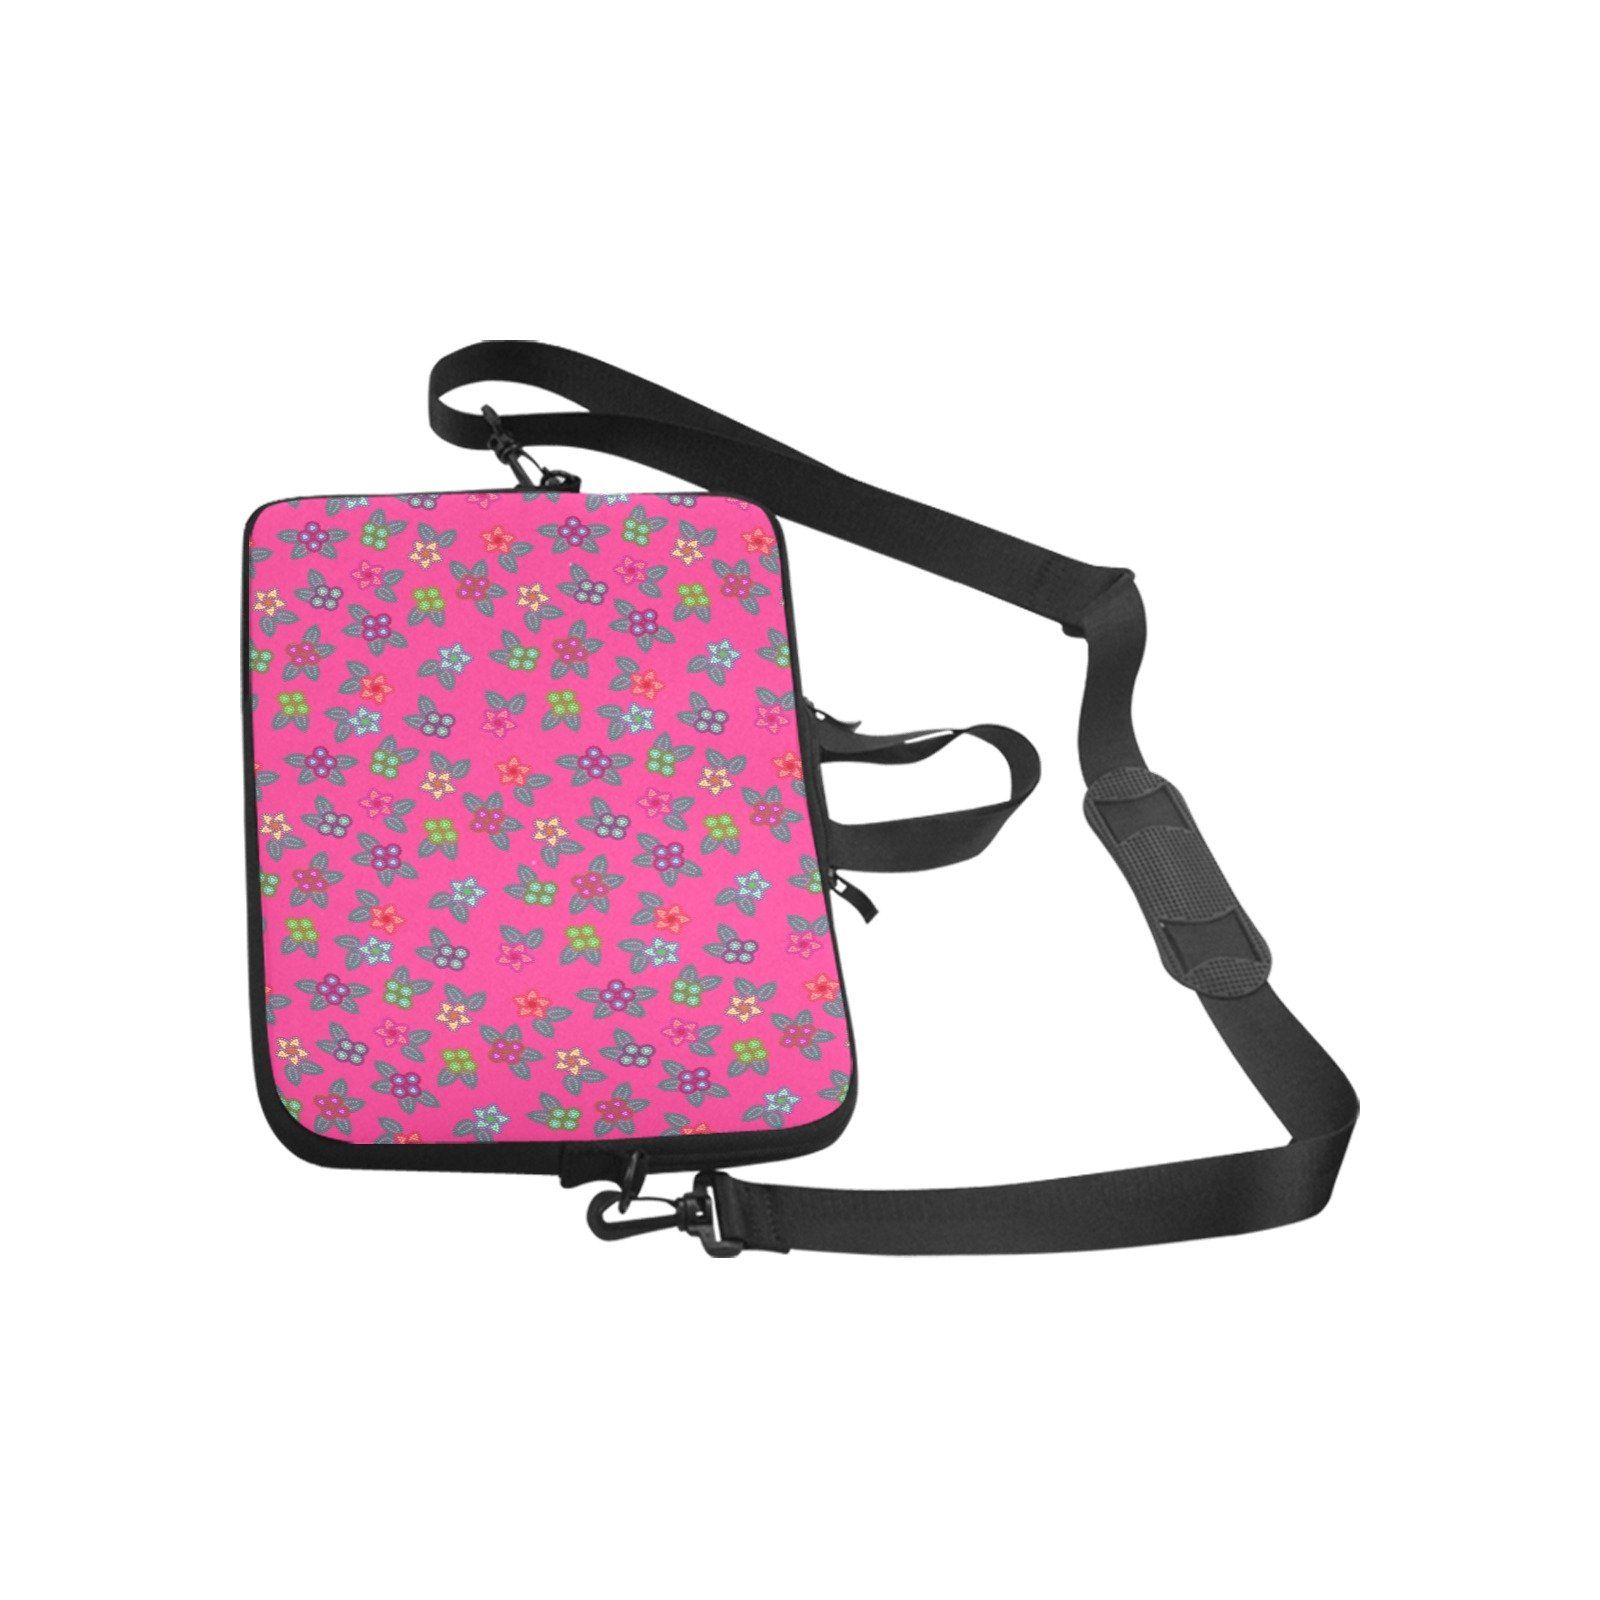 Berry Flowers Laptop Handbags 10" bag e-joyer 